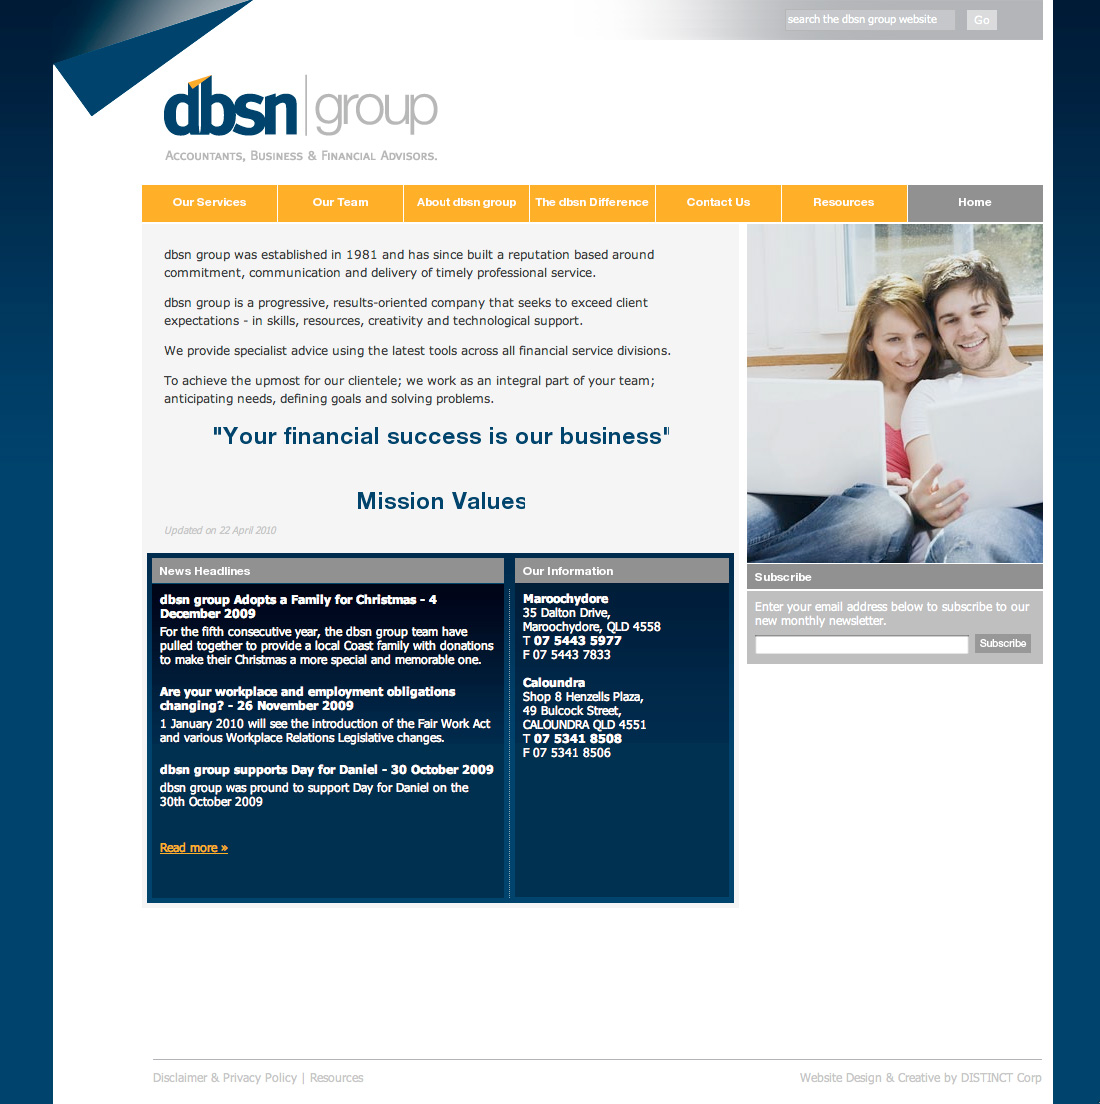 dbsn group (QL Marketing)